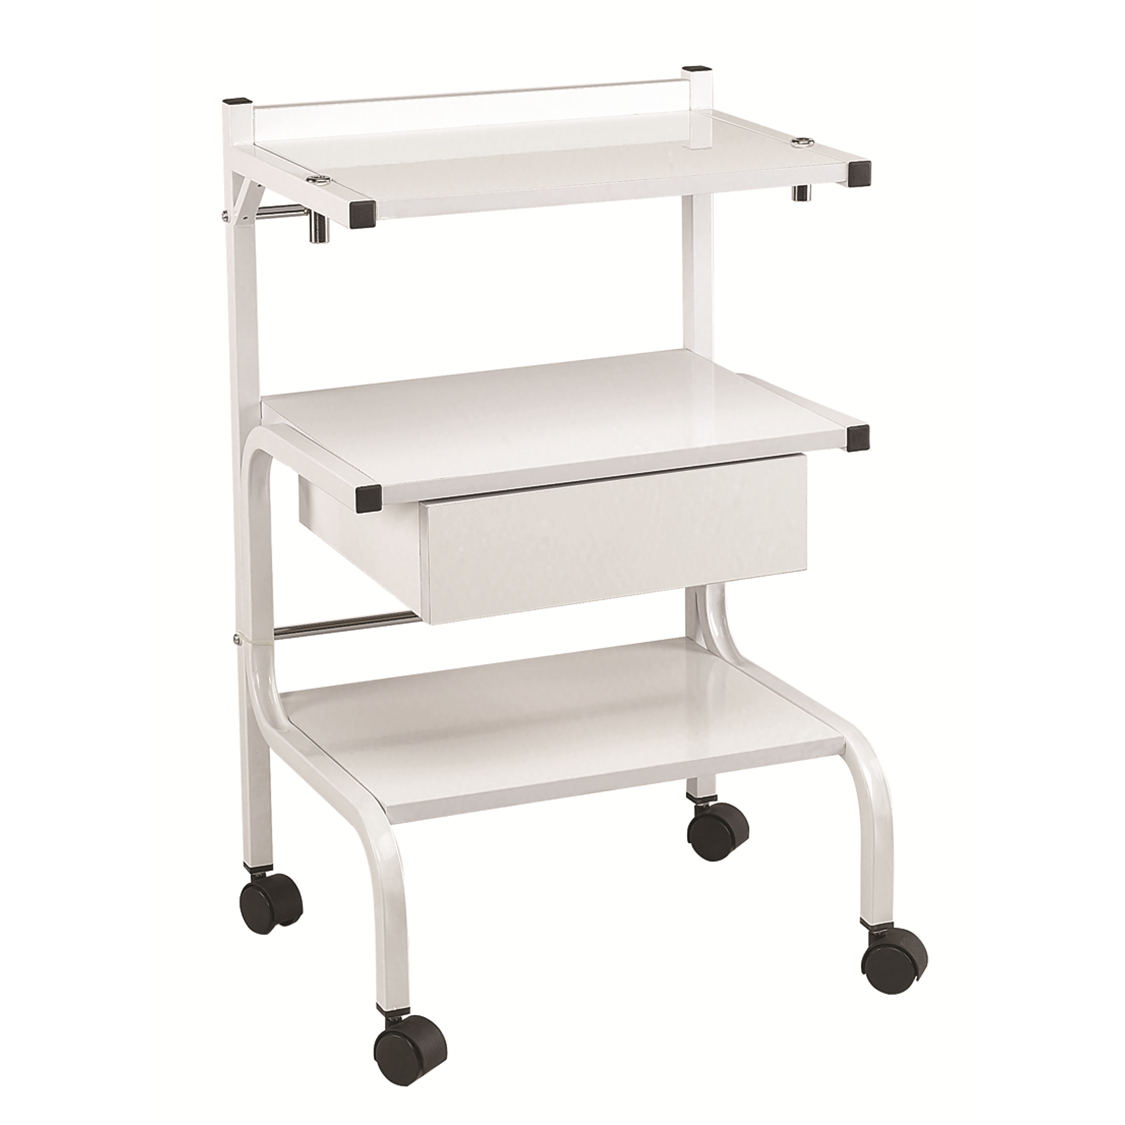 H2 Spa Utility Cart - Garfield Commercial Enterprises Salon Equipment Spa Furniture Barber Chair Luxury